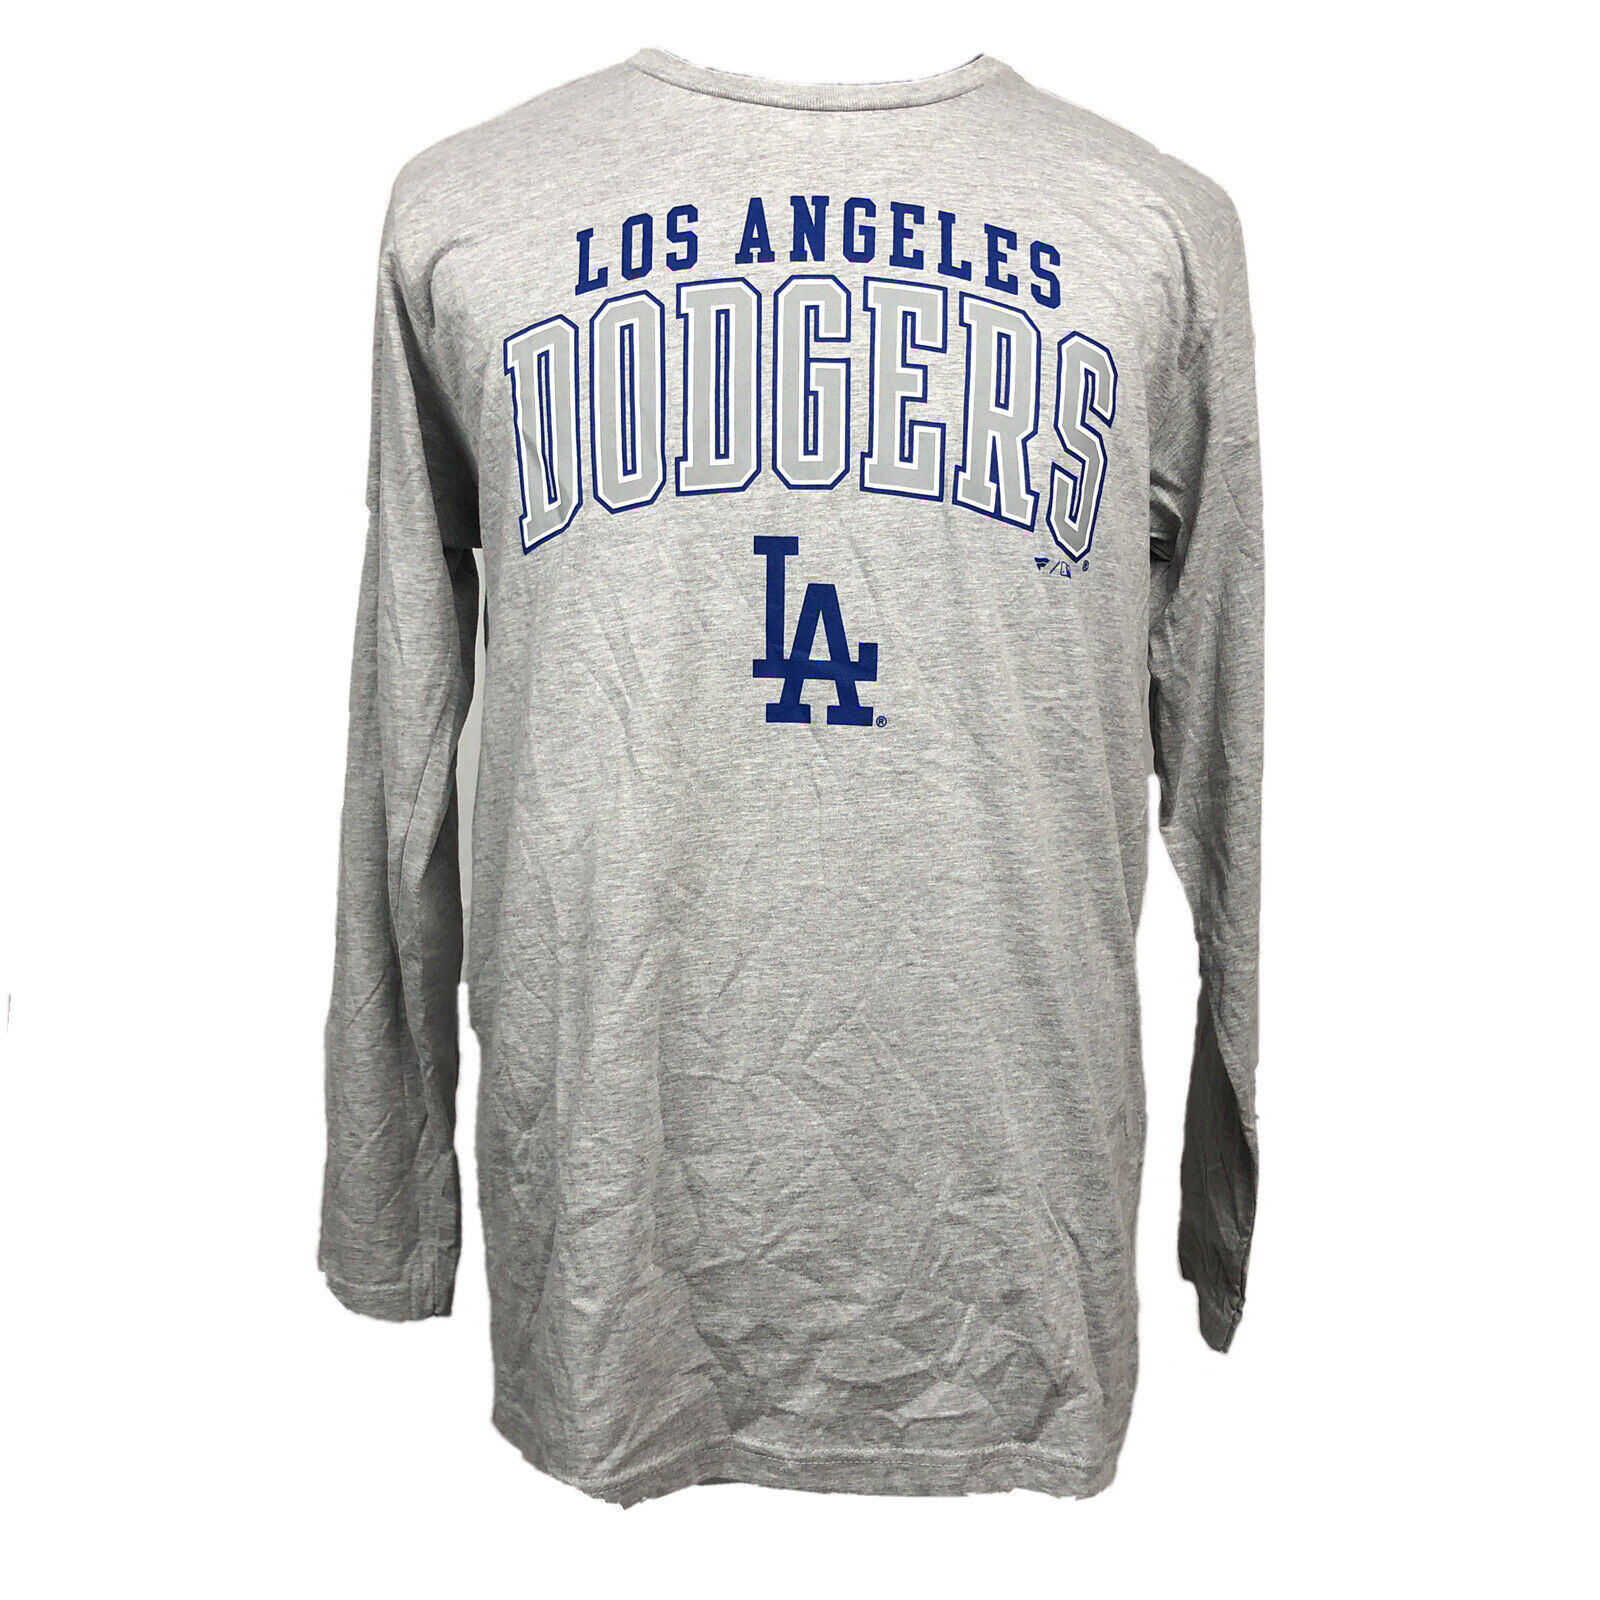 Men's Fanatics Branded Royal/Gray Los Angeles Dodgers T-Shirt Combo Set